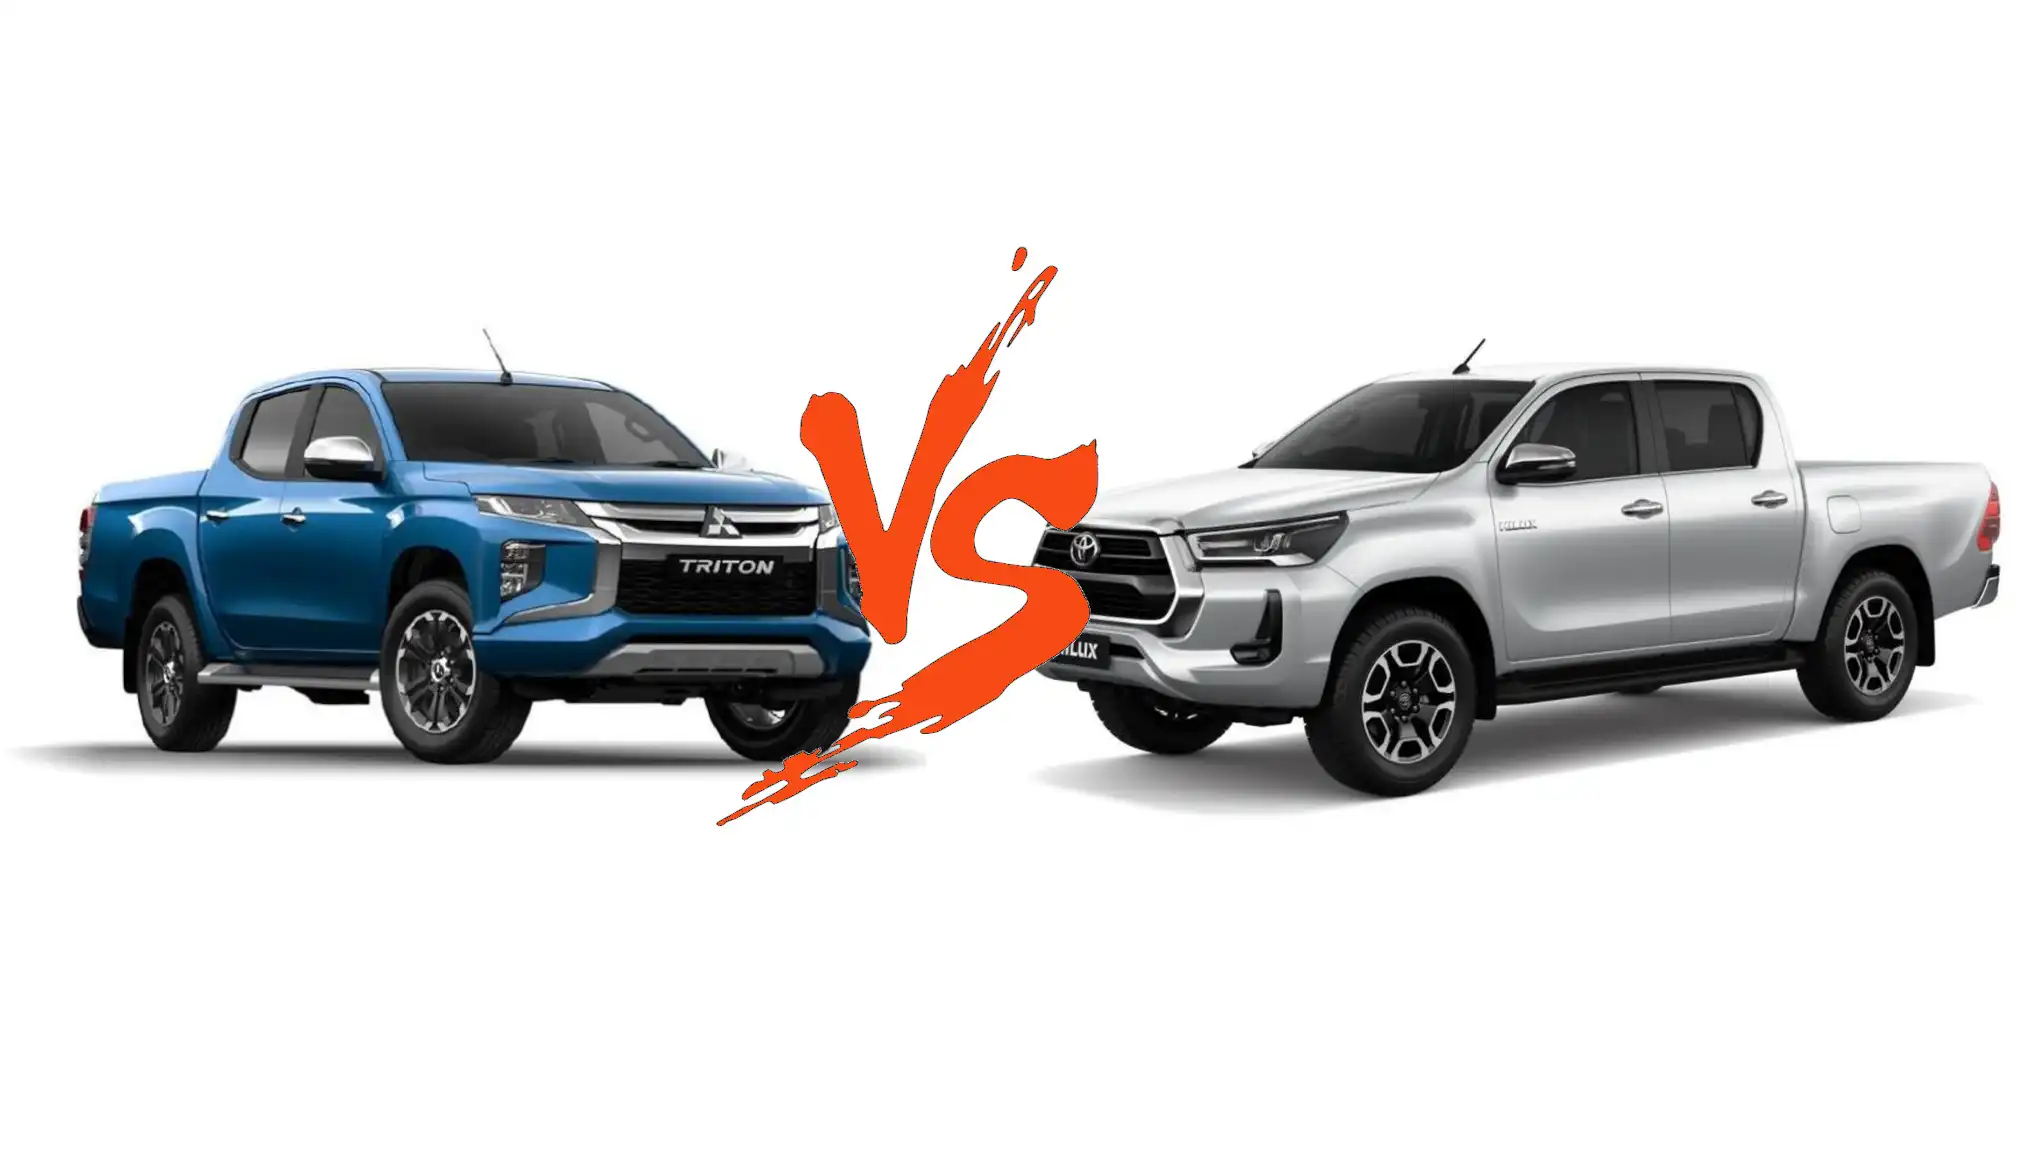 image for Review - Toyota HiLux vs Mitsubishi Triton